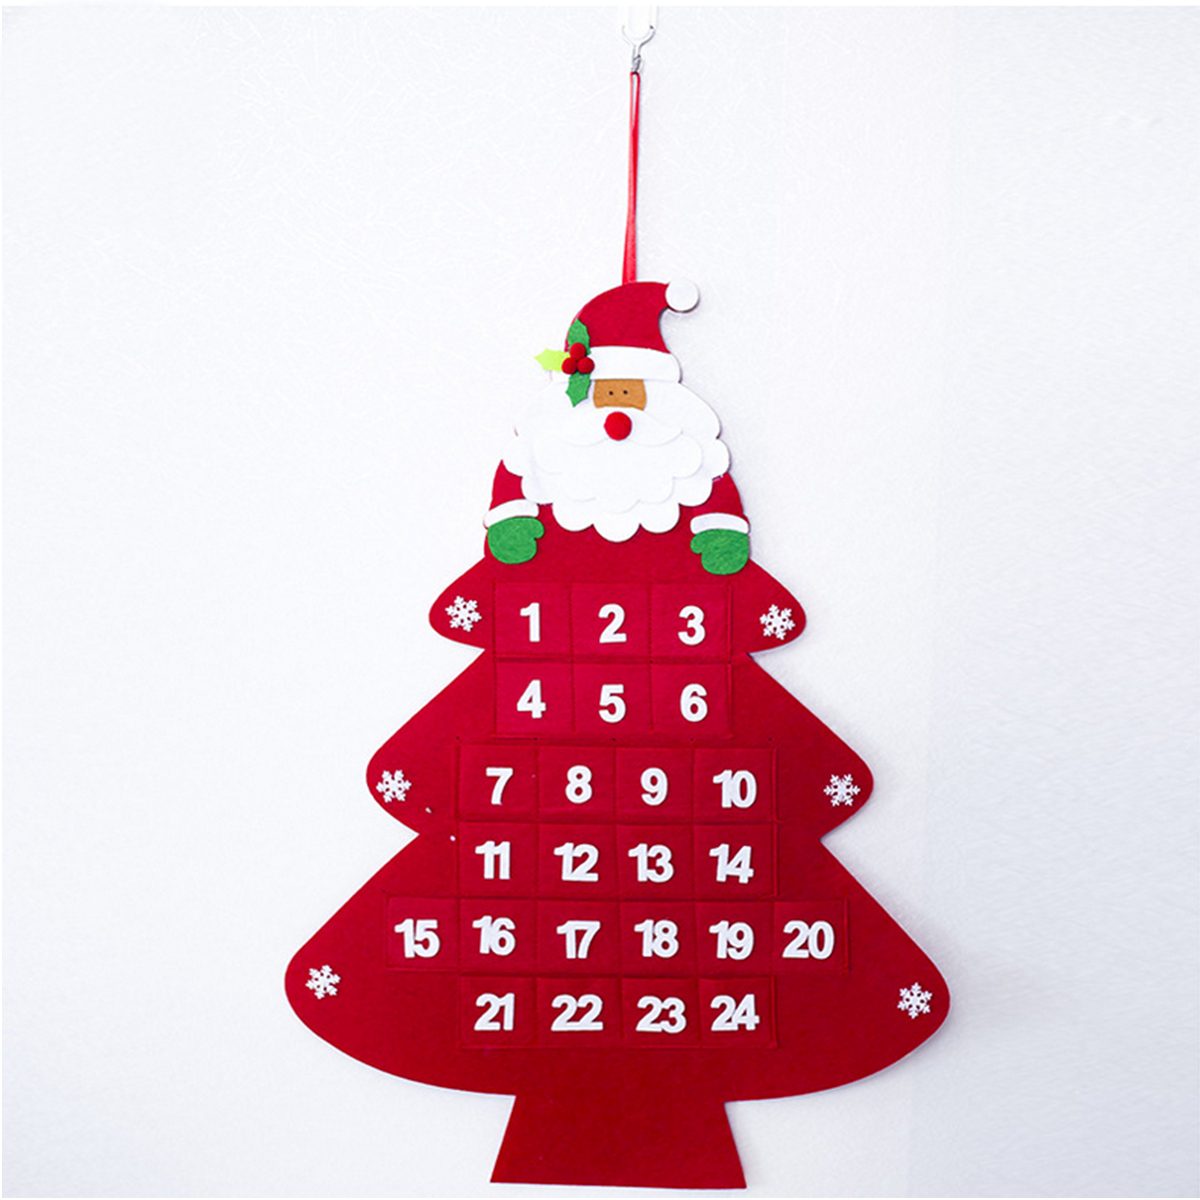 Christmas-Tree-Advent-Calendar-Felt-Fabric-Holiday-Countdown-Christmas-Display-Decor-1370488-4